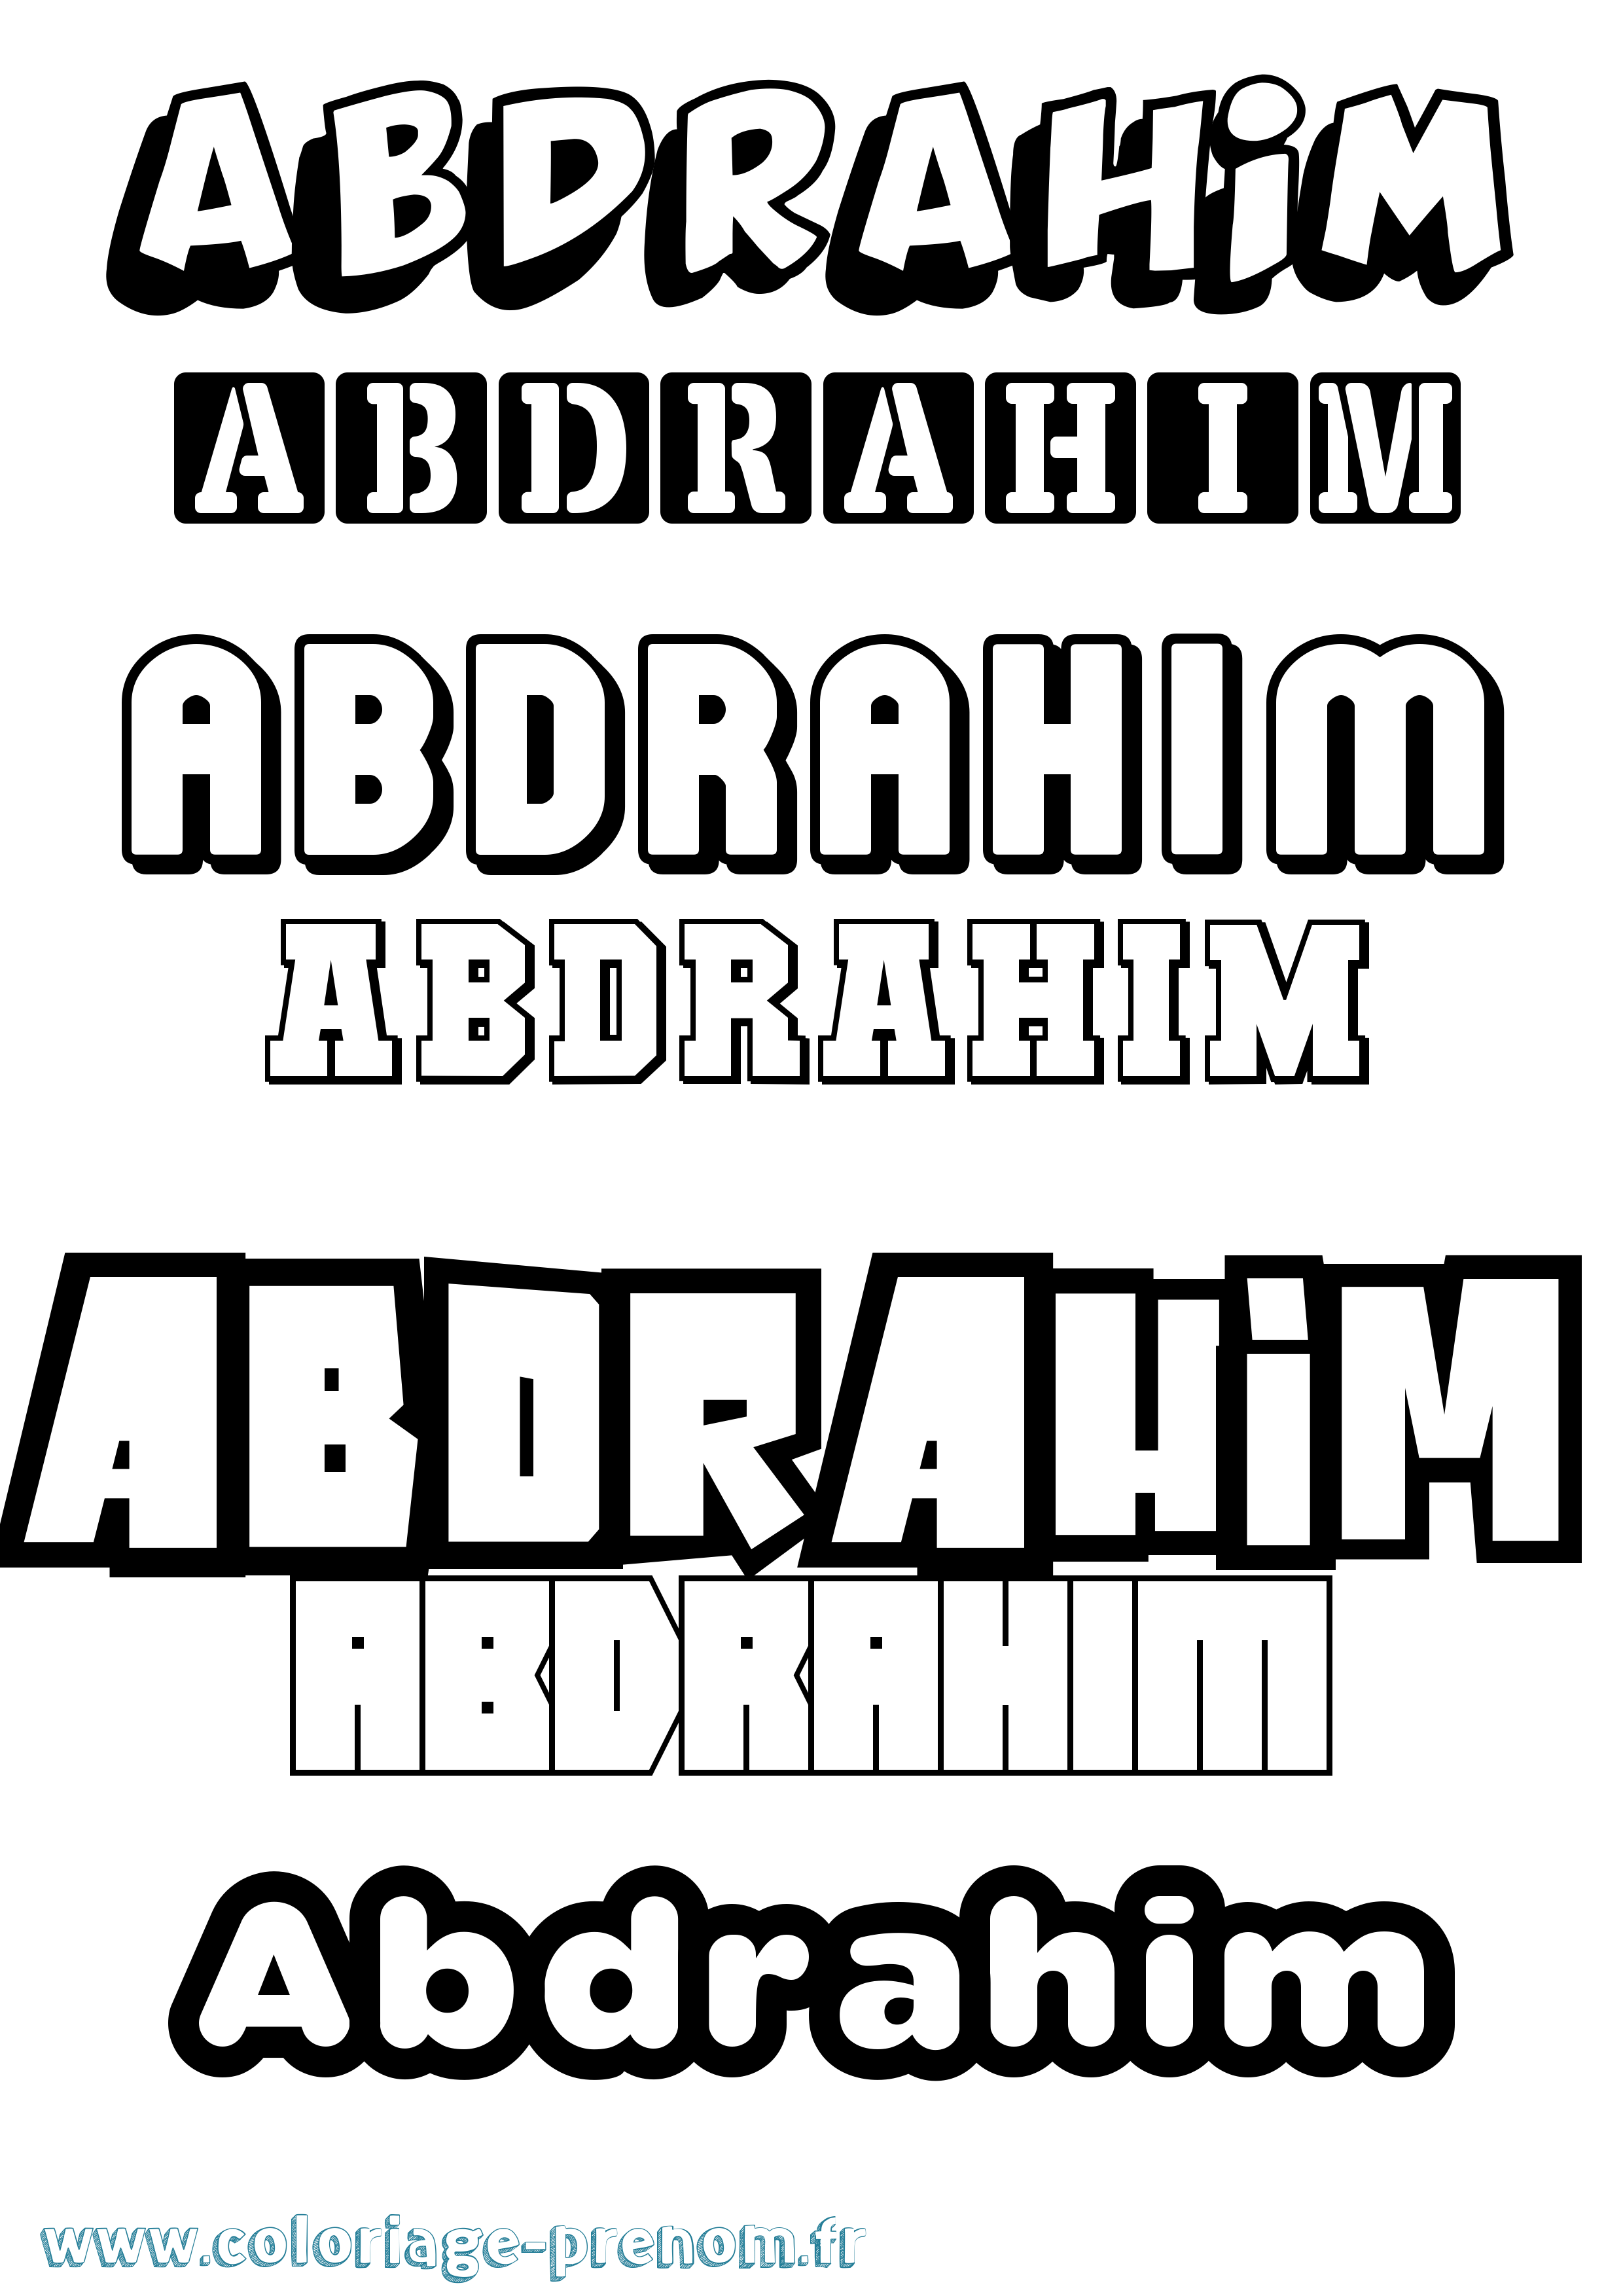 Coloriage prénom Abdrahim Simple